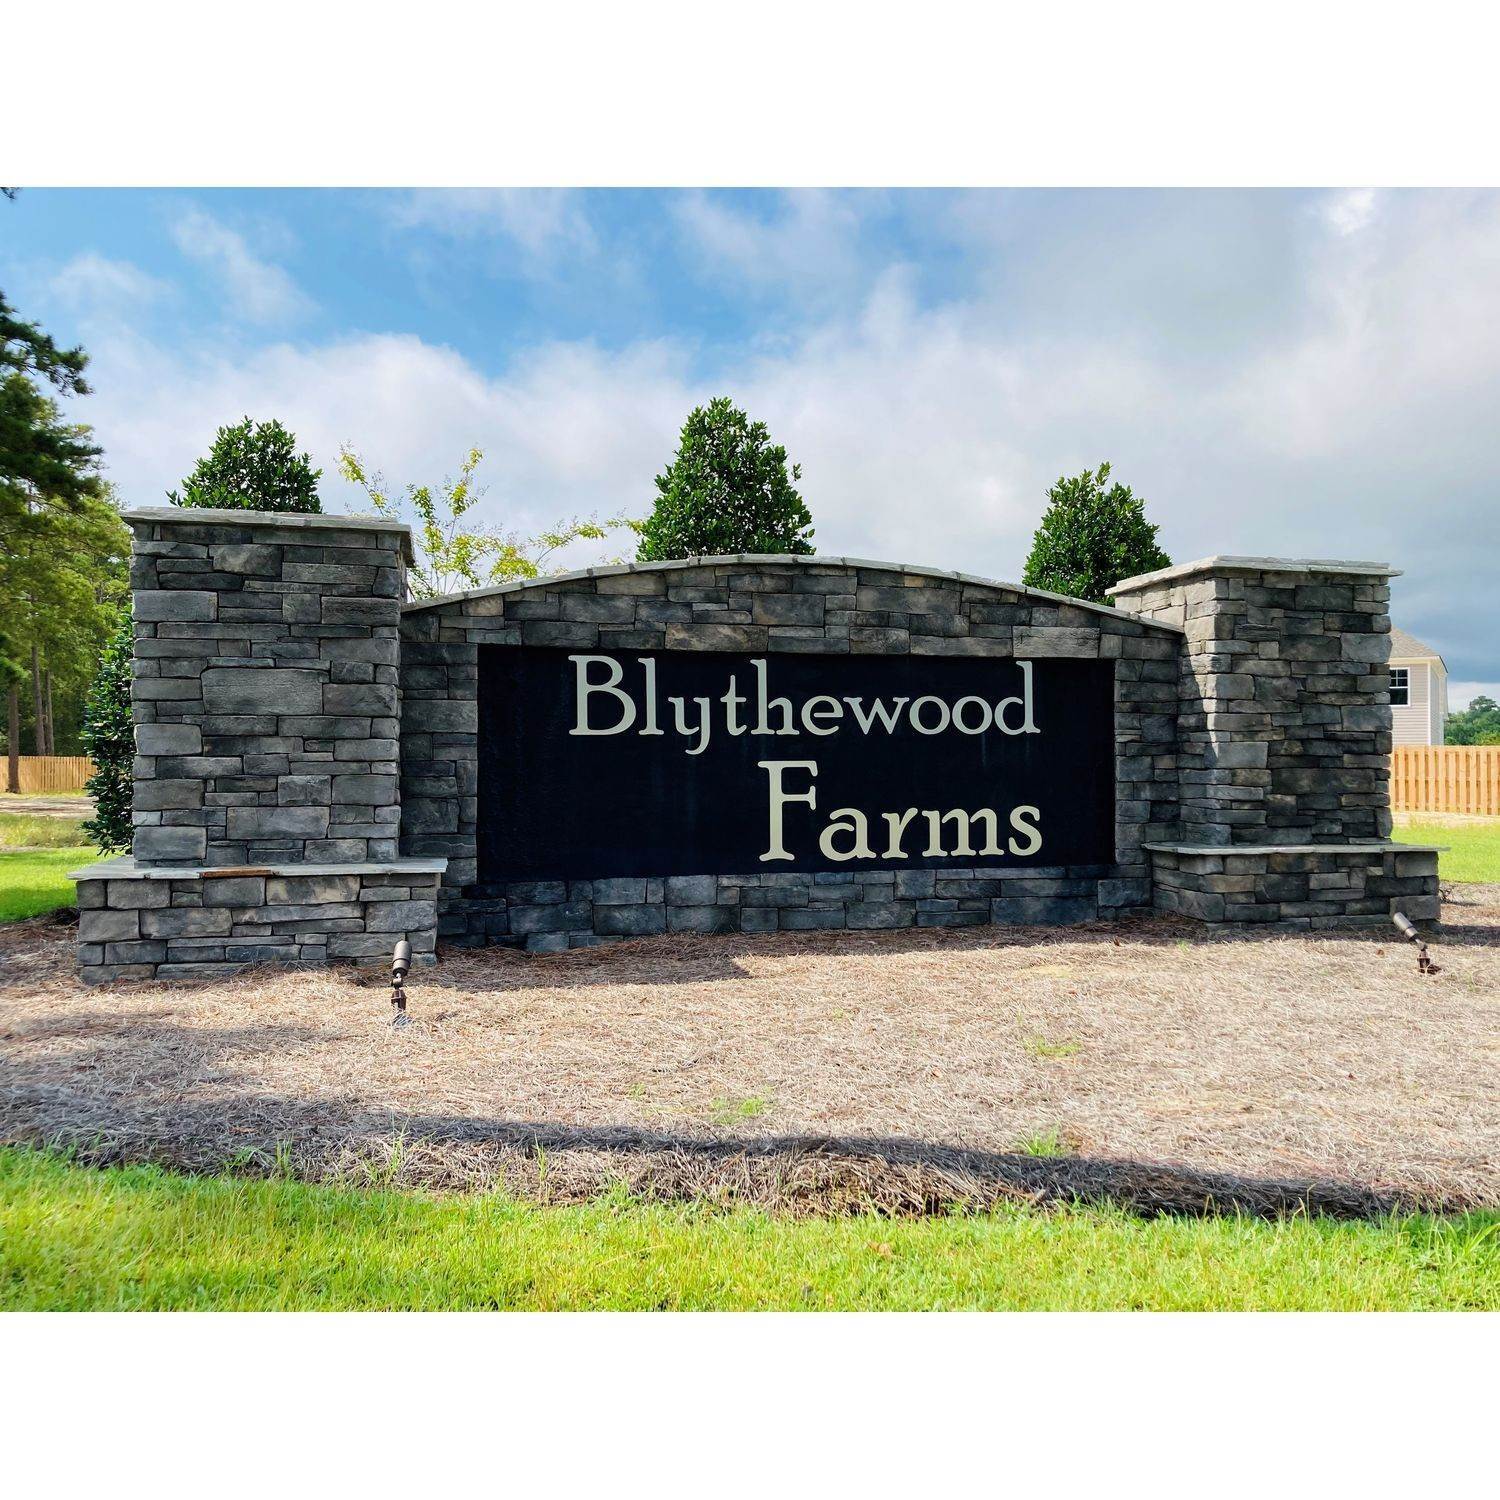 2. Blythewood Farms xây dựng tại 1104 Deep Creek Road, Blythewood, SC 29016